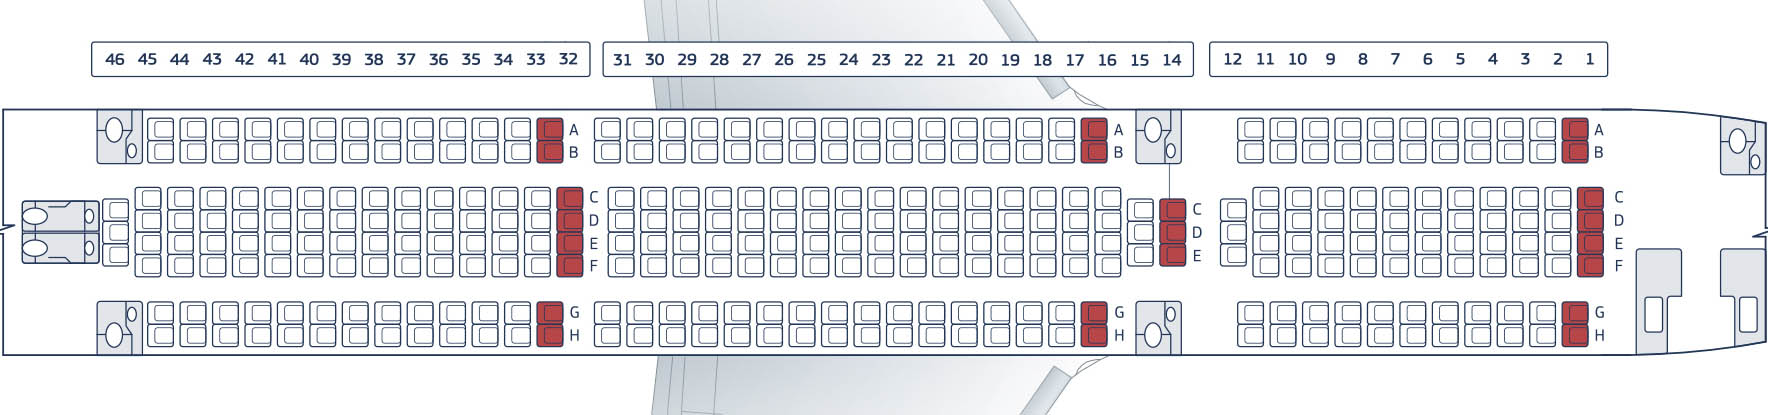 Boeing 767 схема. Боинг 767-300 расположение мест. Схема самолета Боинг 767-300. Расположение мест в самолете Боинг 767. Боинг-767-300 схема салона.